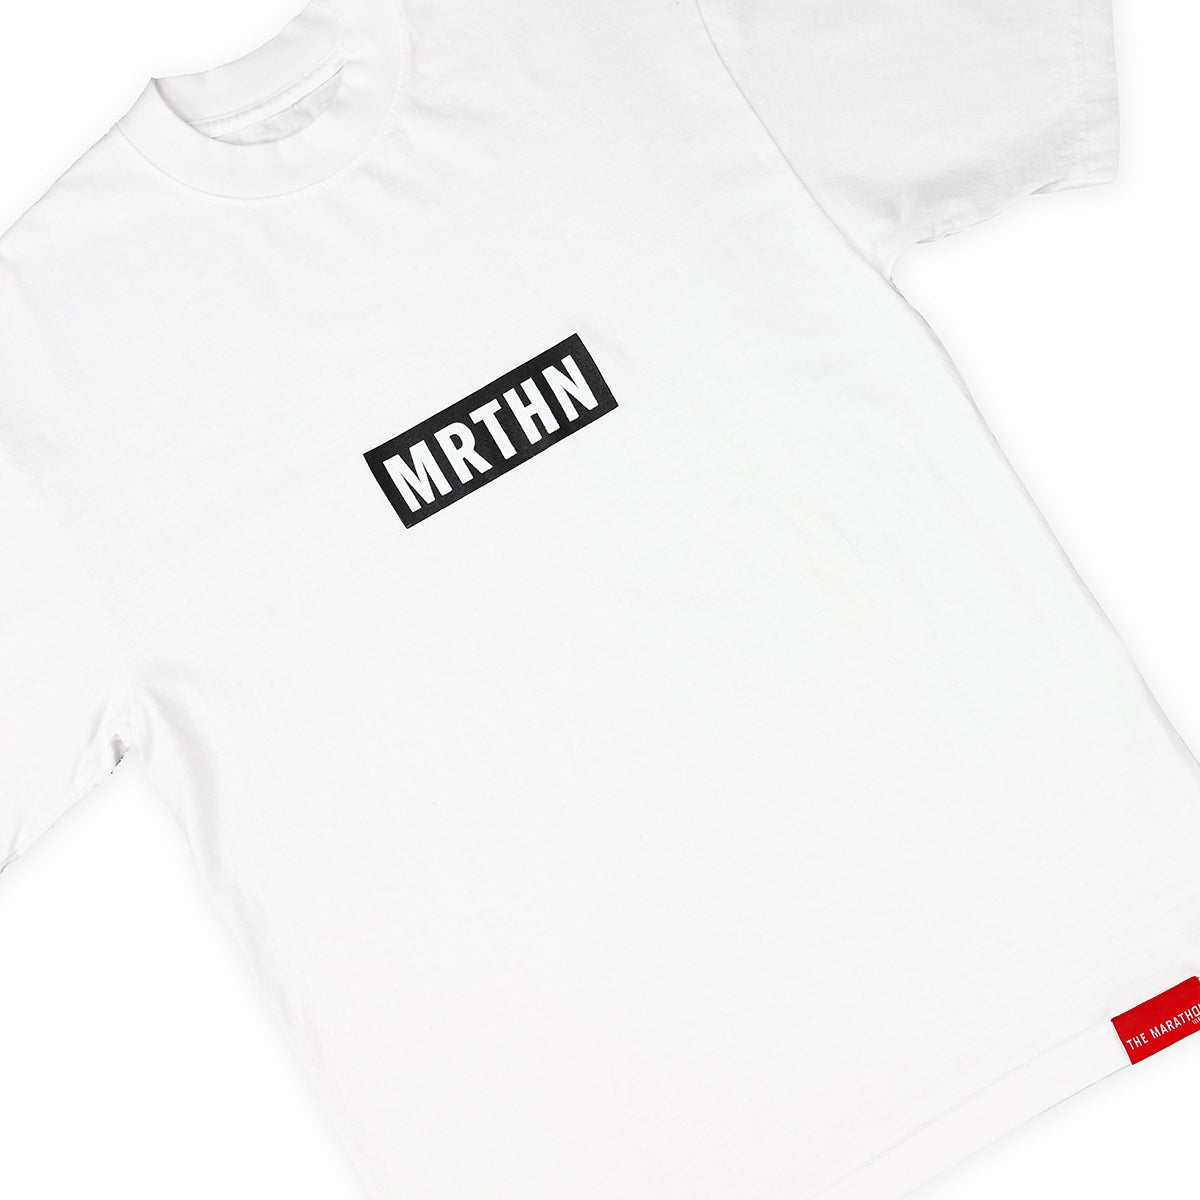 MRTHN T-shirt - White/Black - Detail